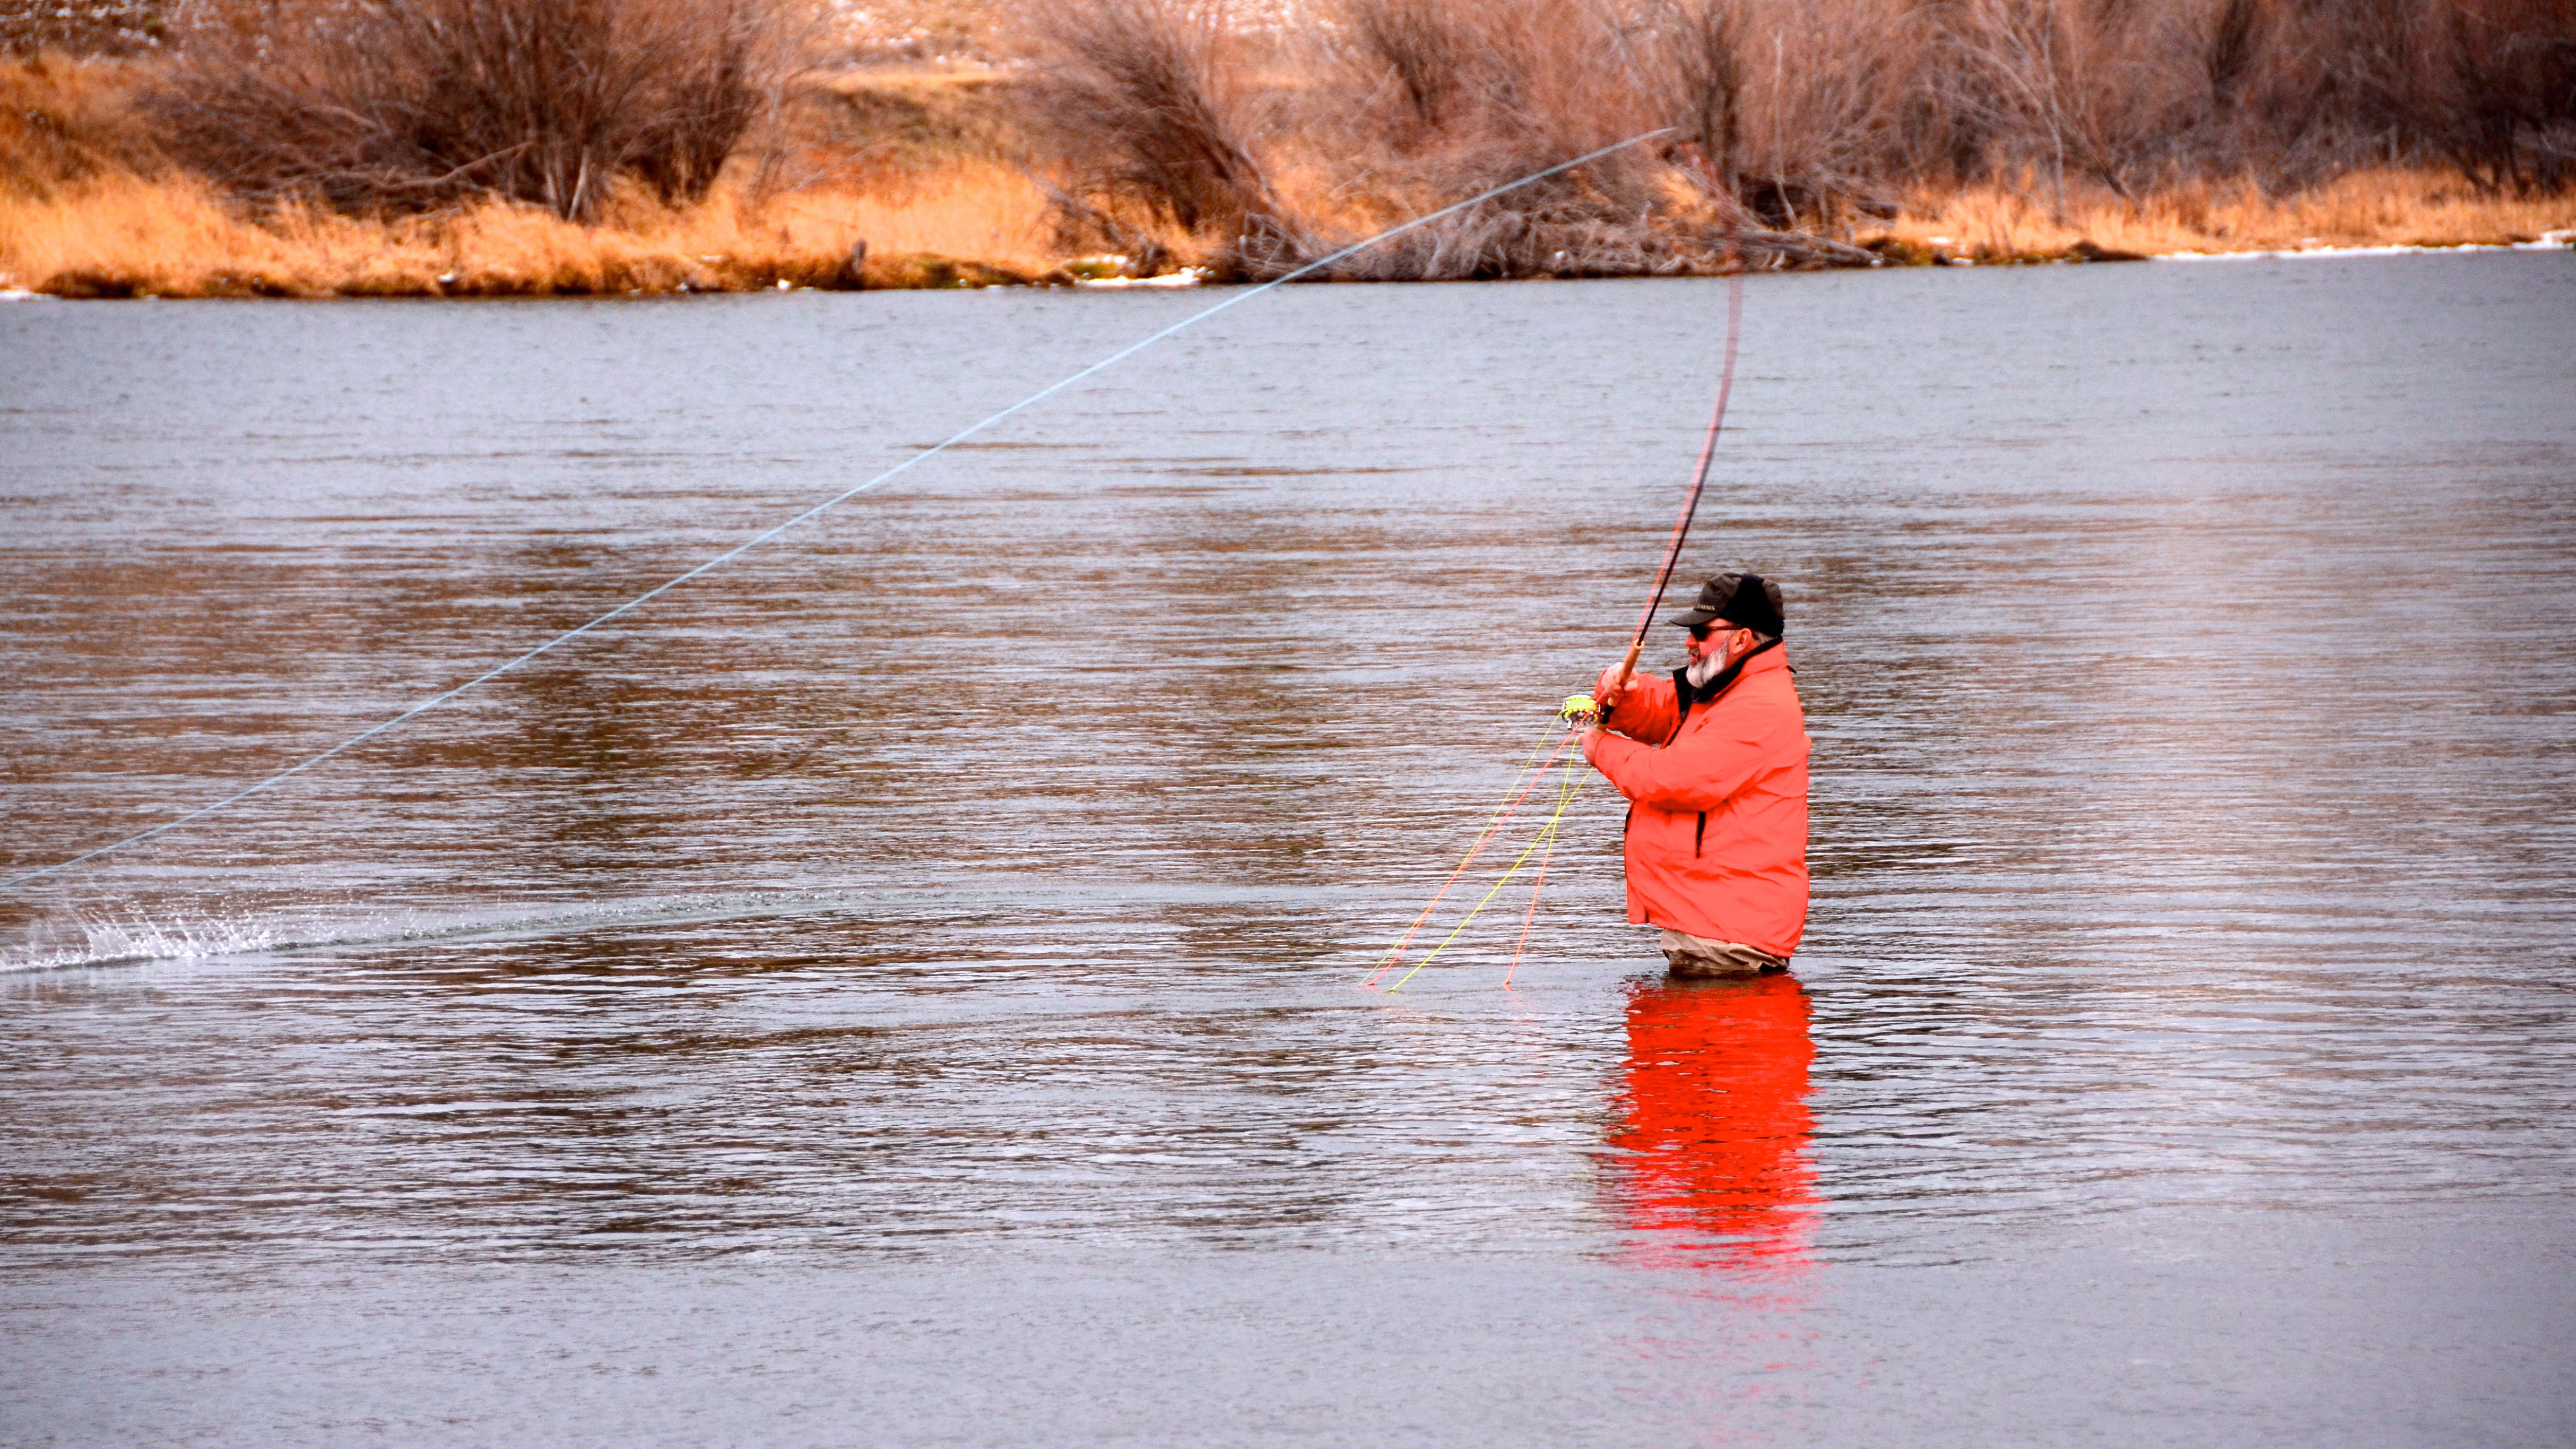 Missouri River Winter Solstice Fishing Report 12.21.14